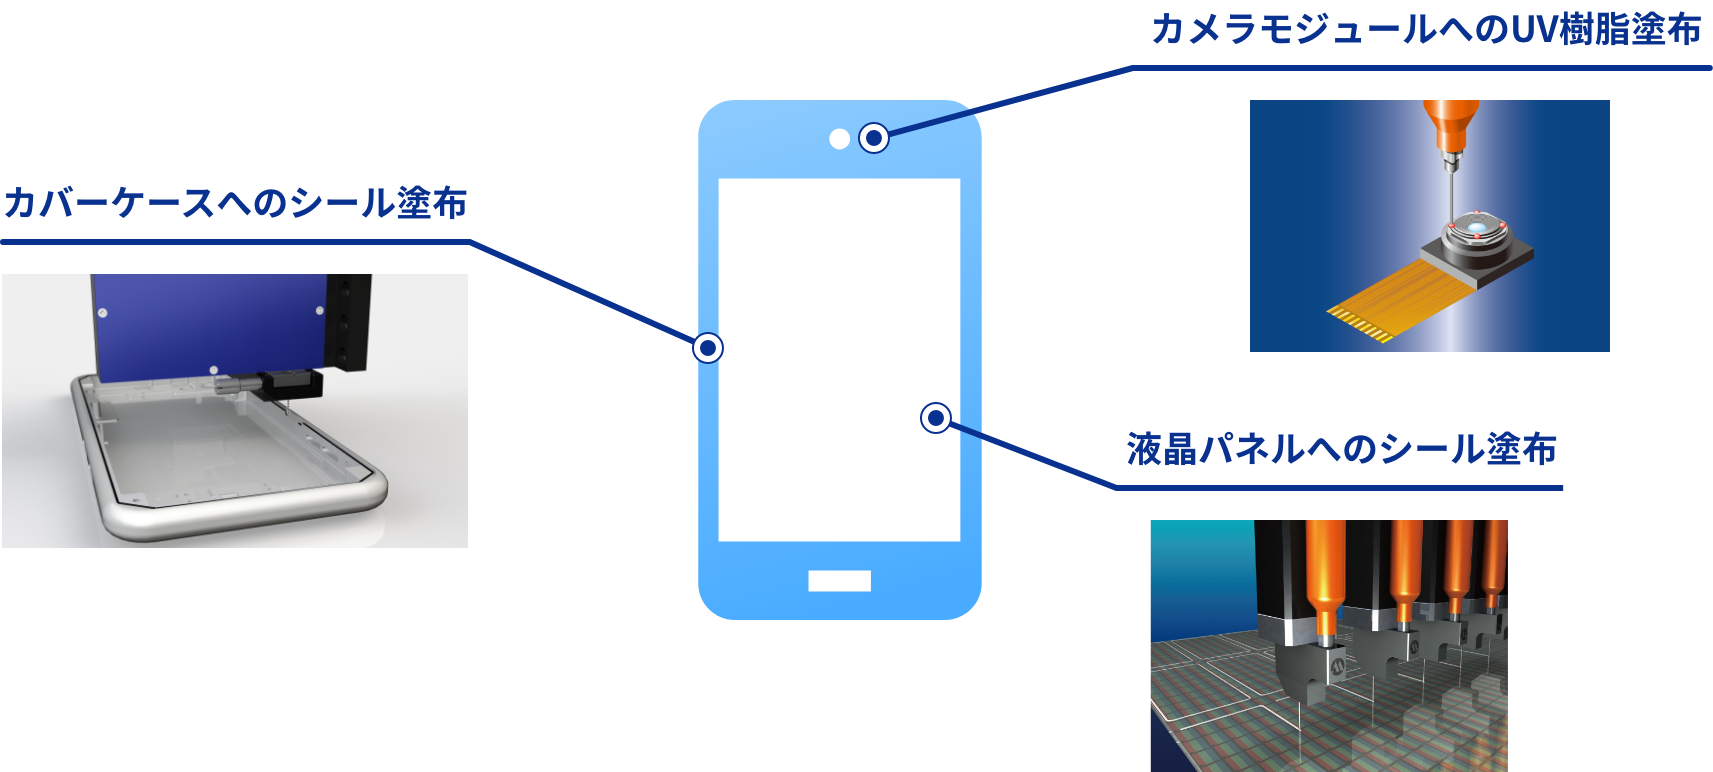 Exemple appliqué ① smartphone